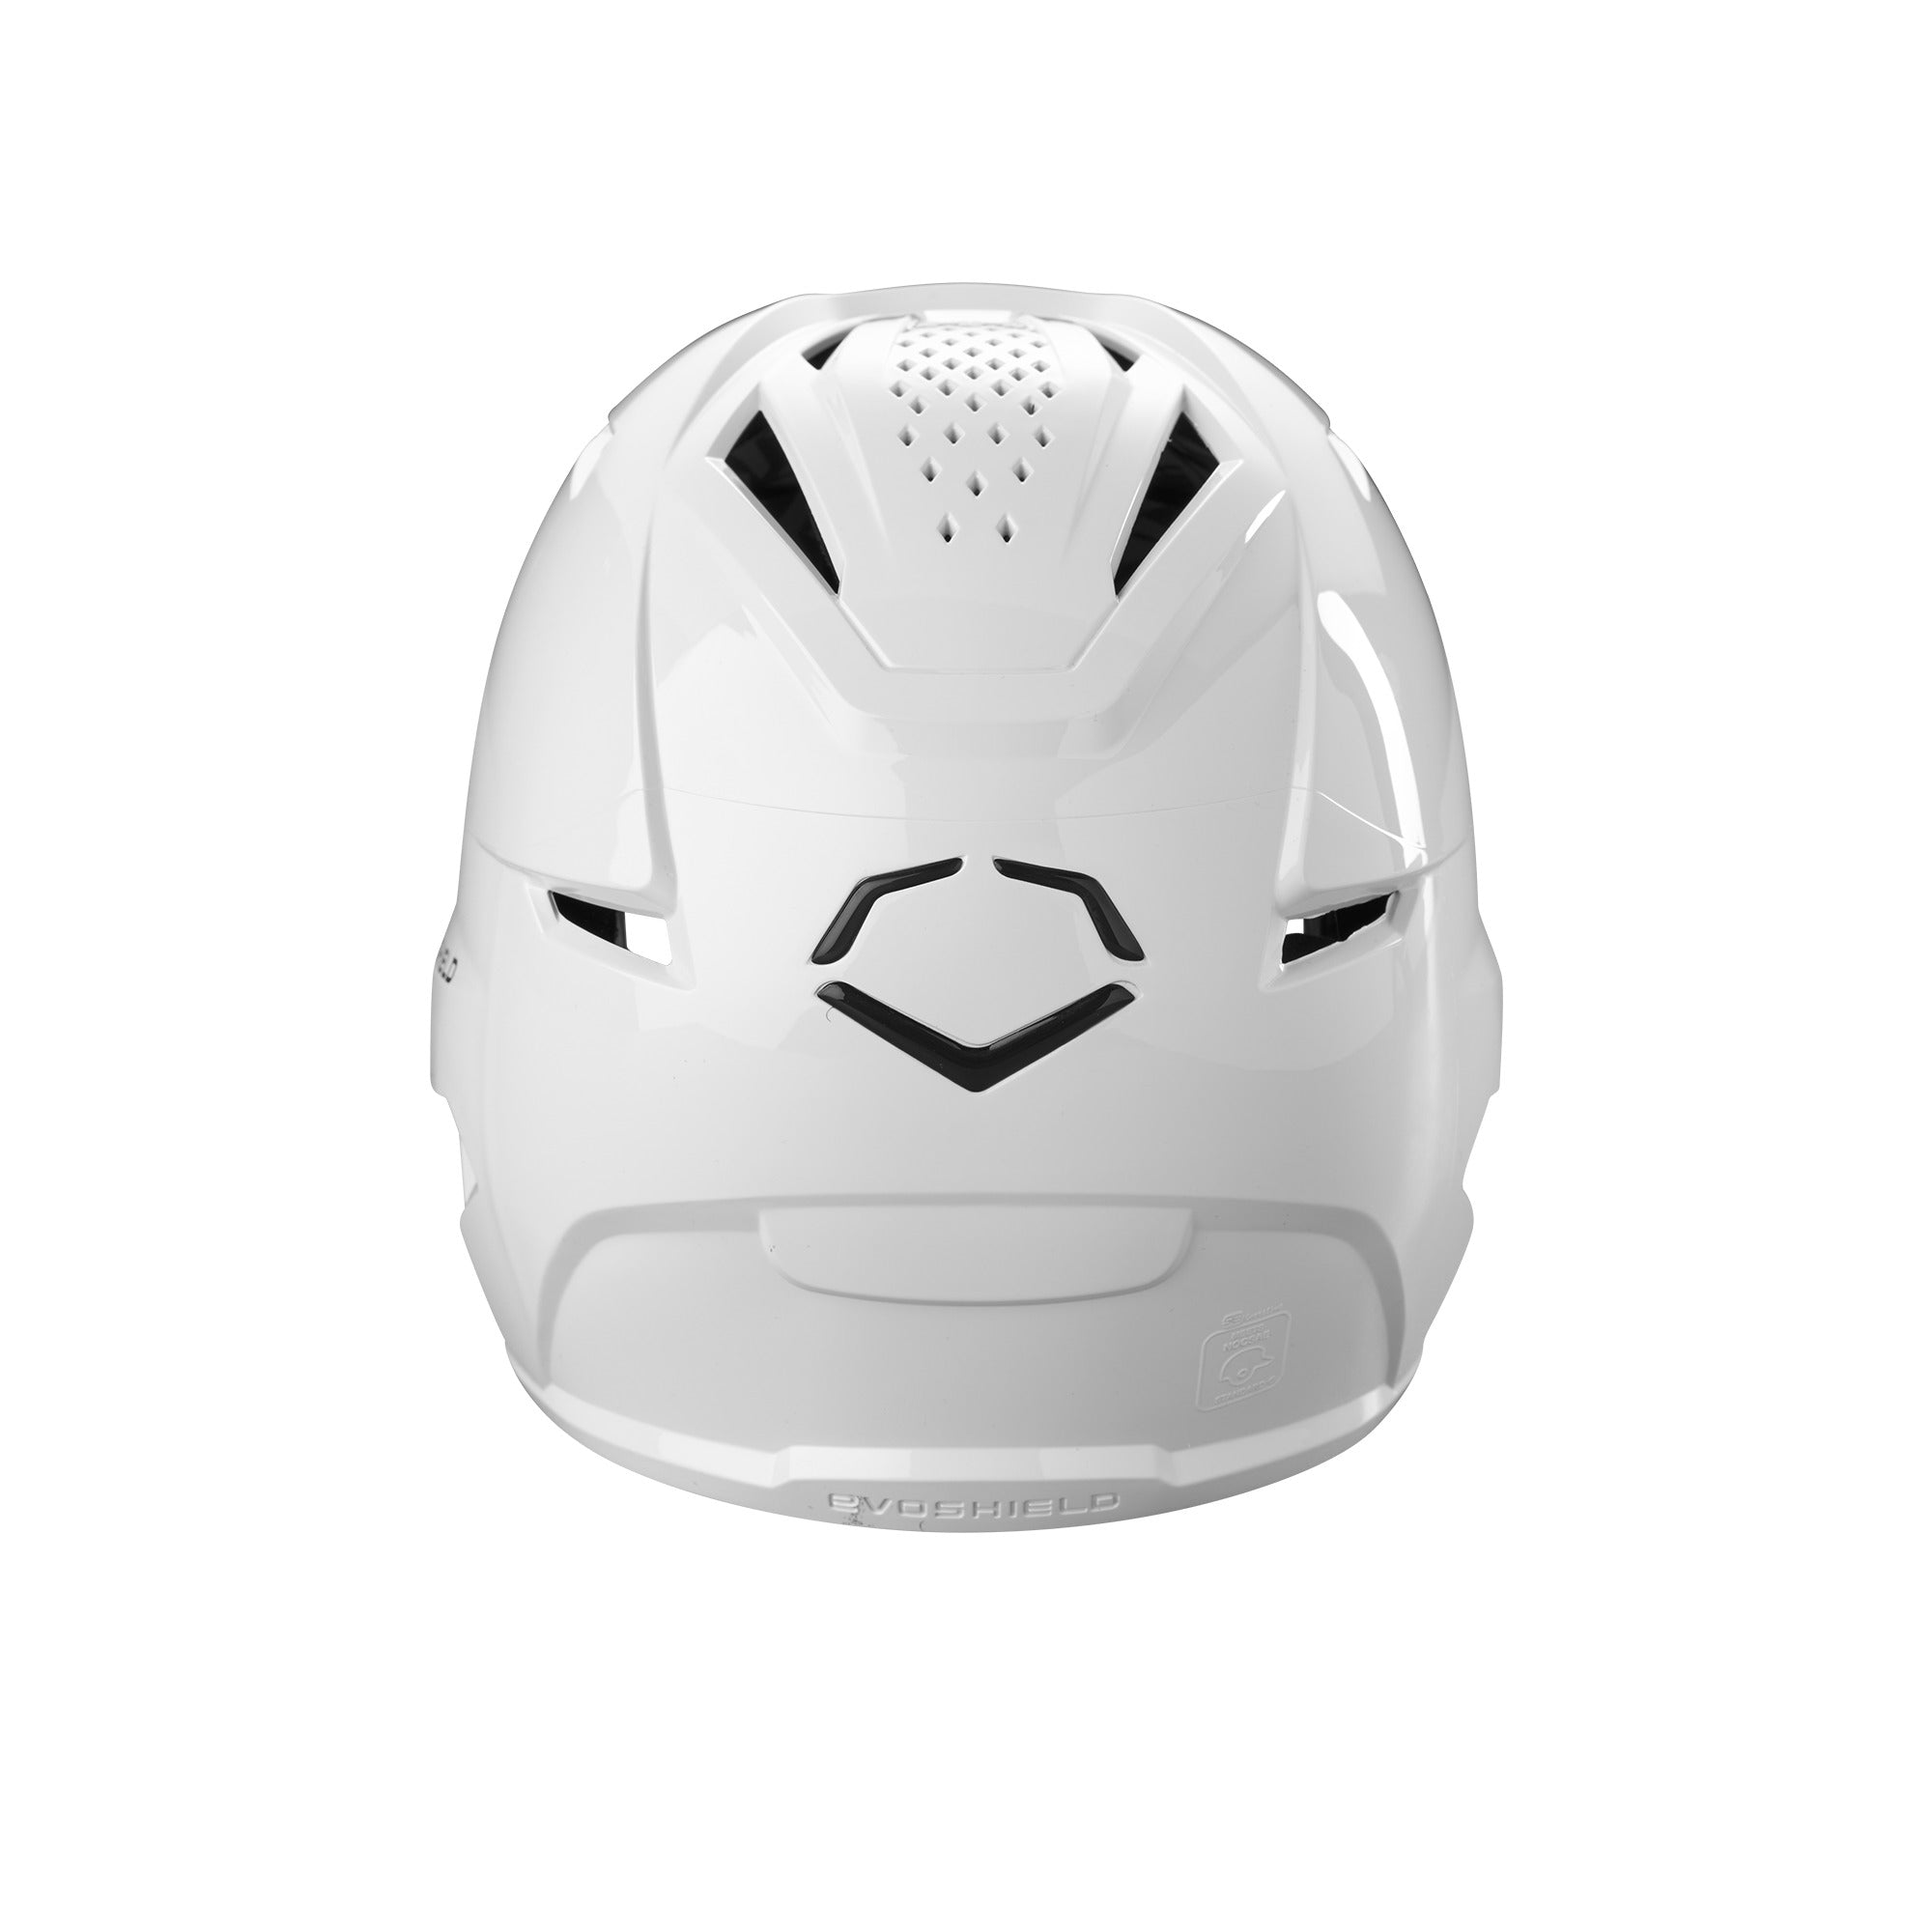 Evoshield XVT 2.0 Glossy Batting Helmet Team White